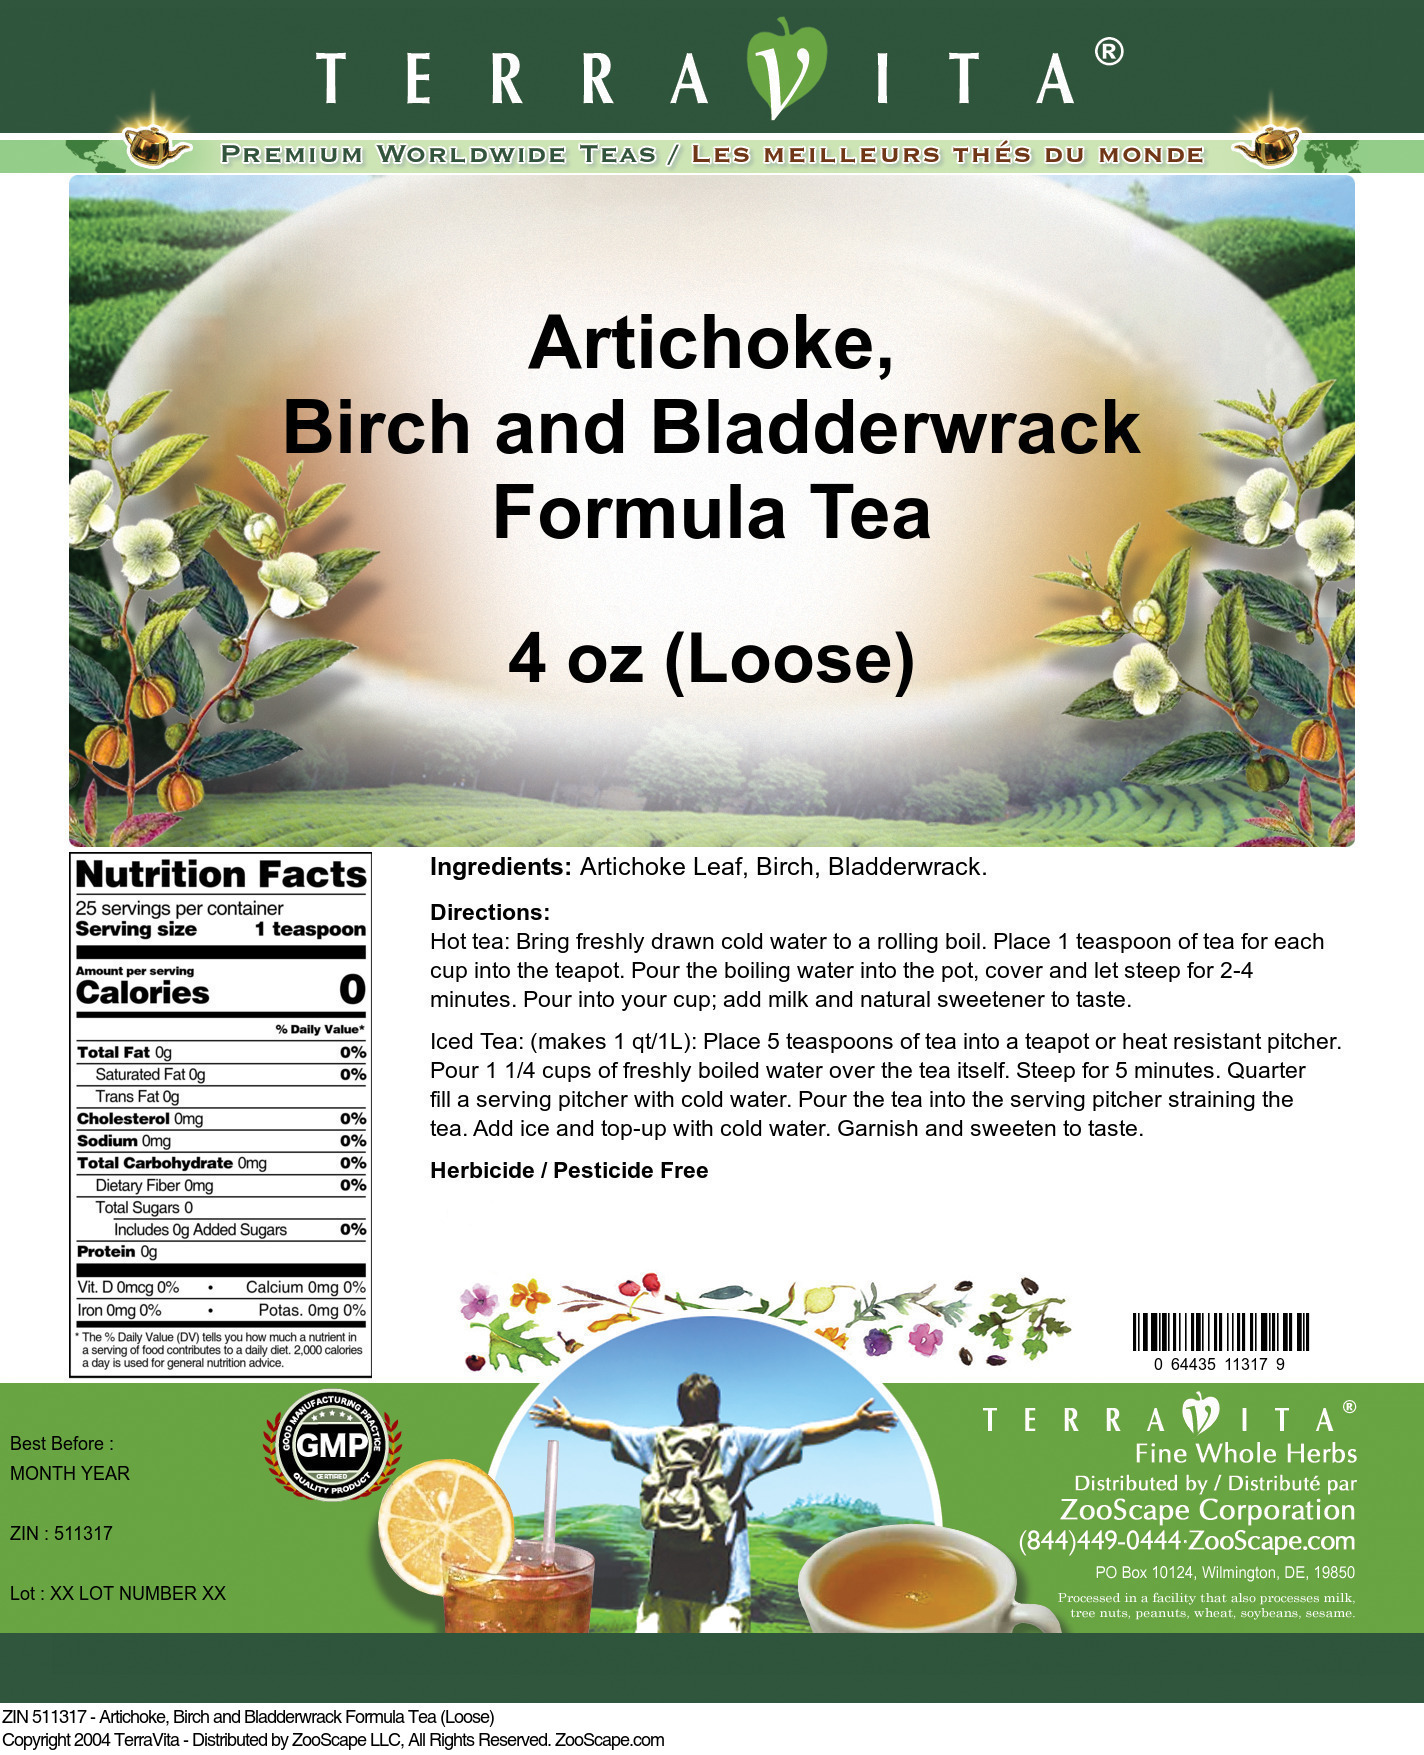 Artichoke, Birch and Bladderwrack Formula Tea (Loose) - Label